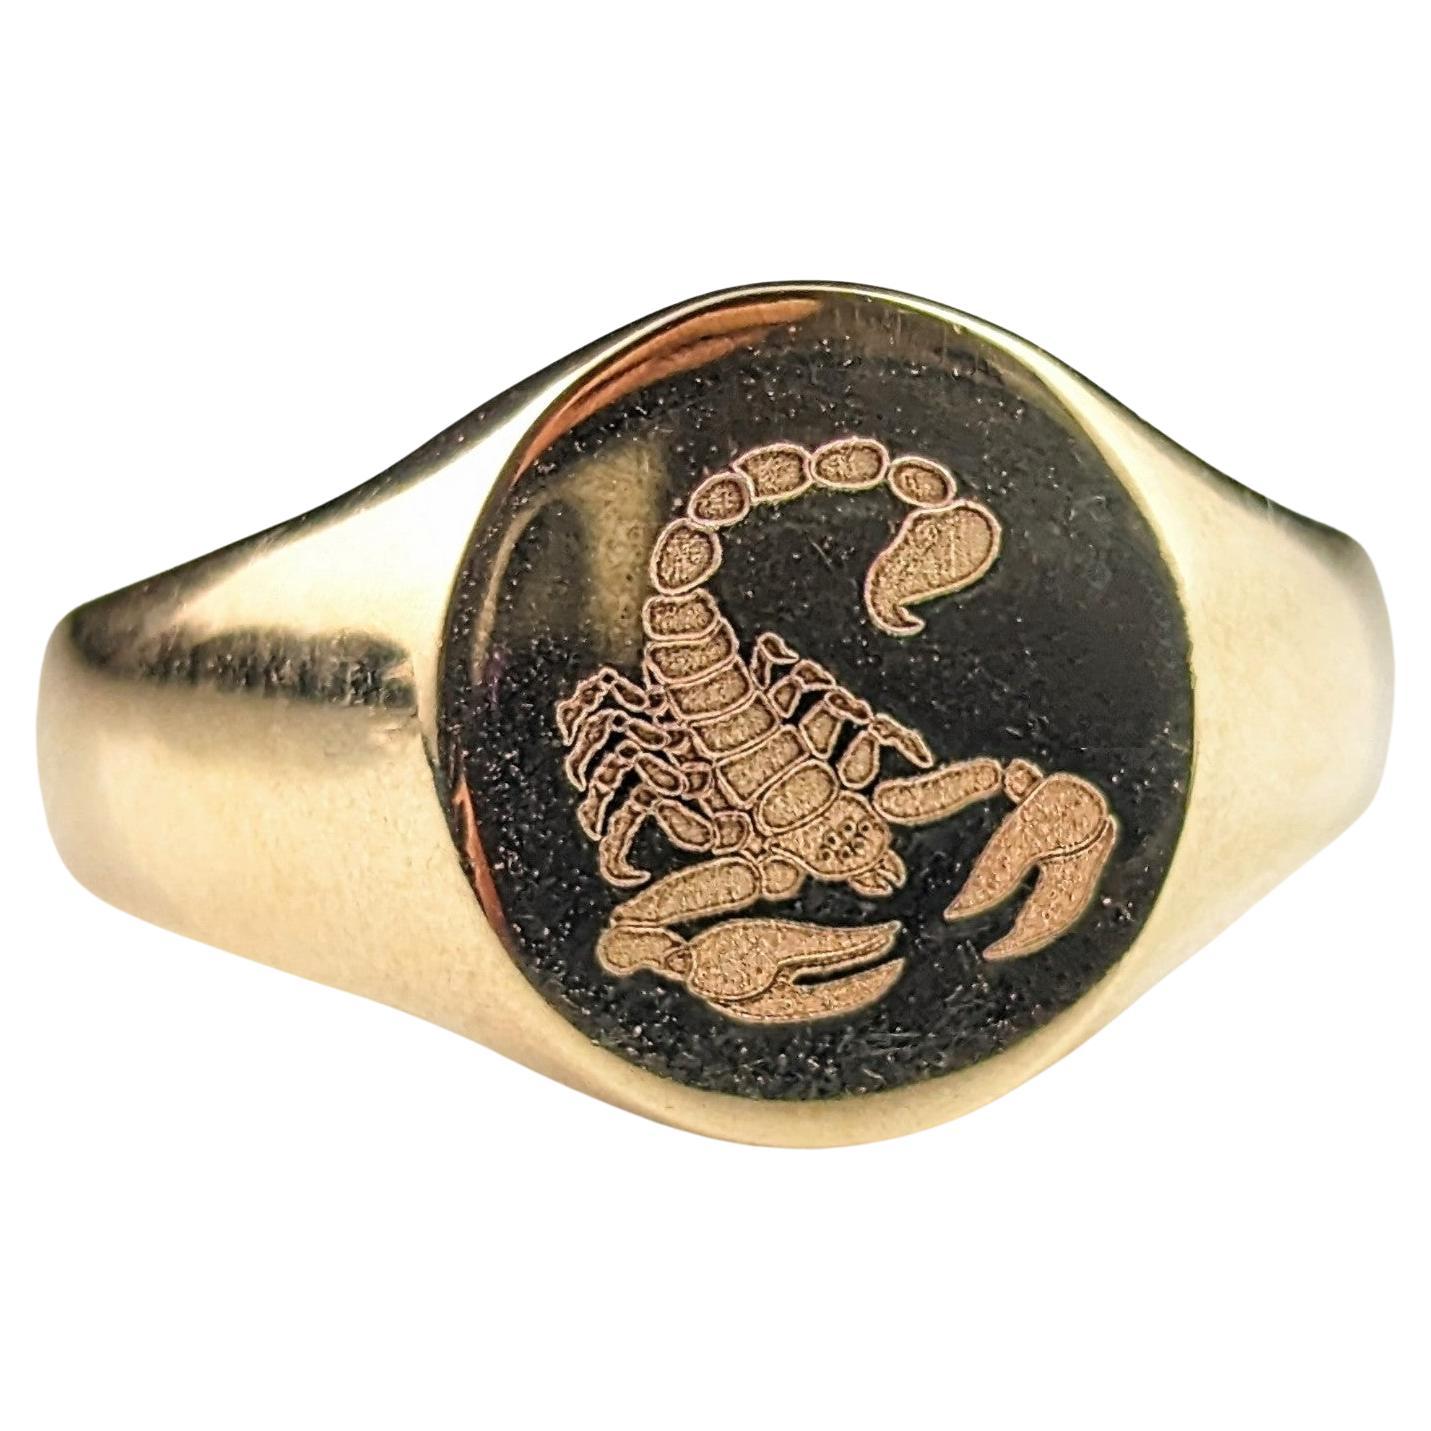 Vintage 9k gold signet ring, Scorpion, heavy 